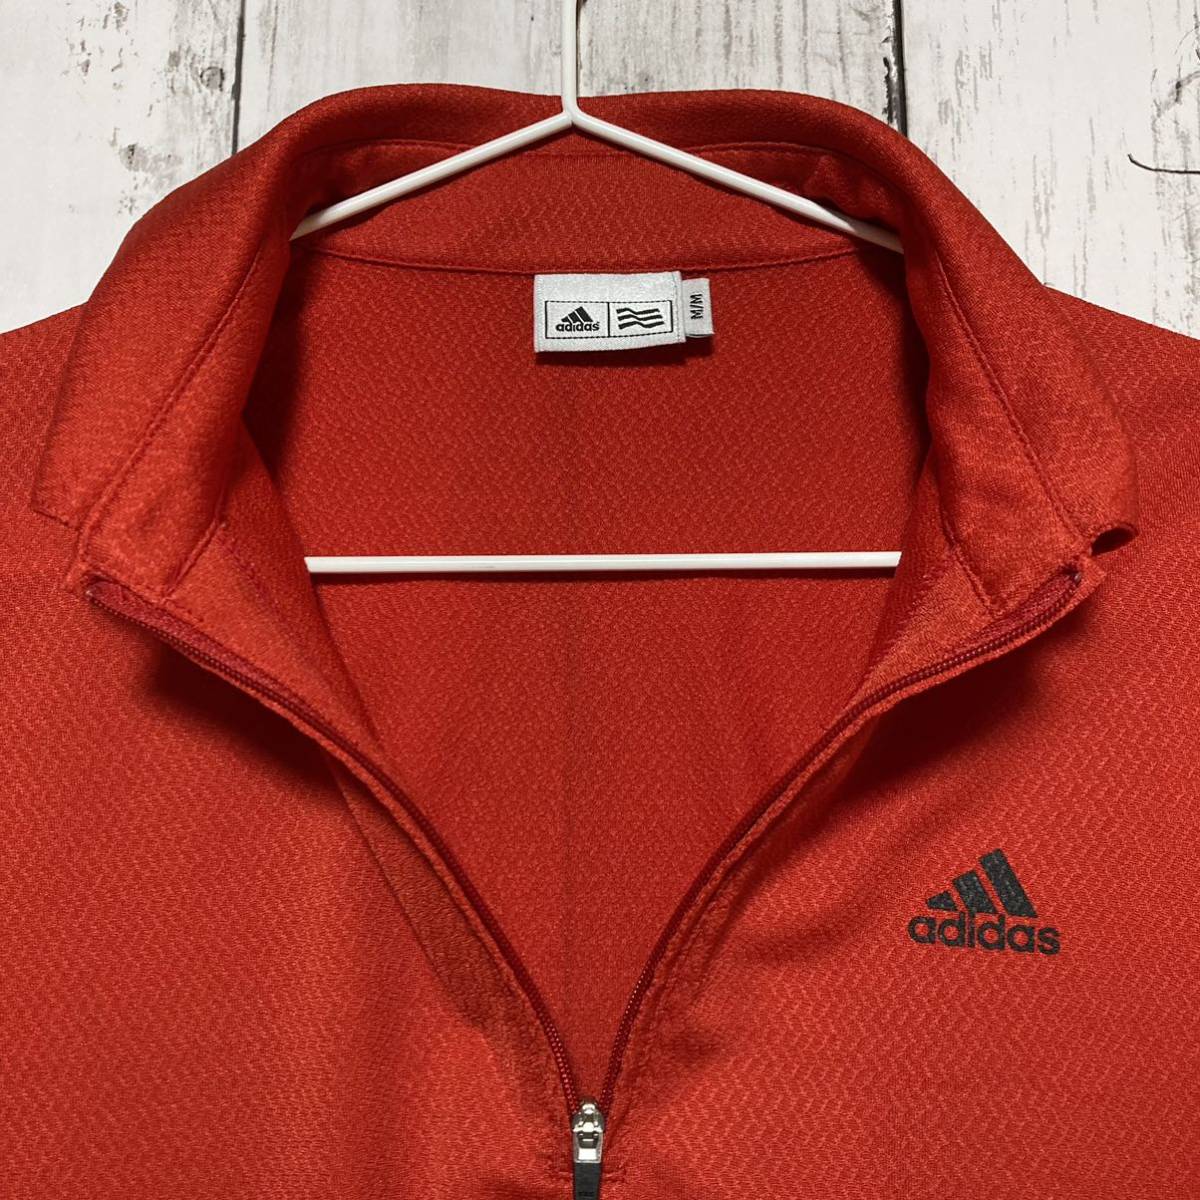 【adidas GOLF】アディダスゴルフ メンズ 半袖ハーフジップシャツ Mサイズ 赤_画像4